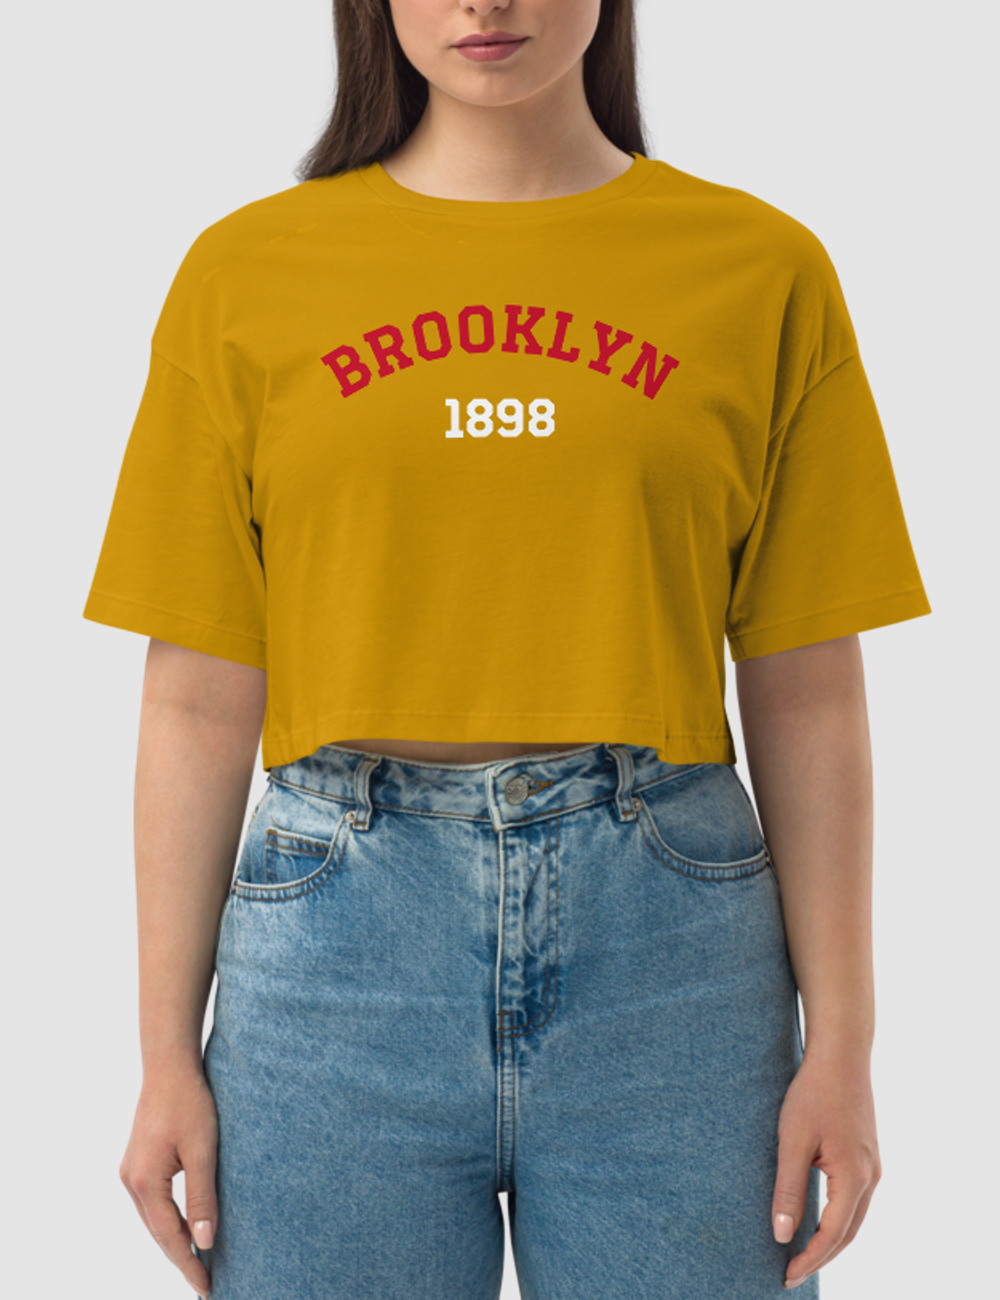 Brooklyn 1898 | Women's Loose Fit Crop Top T-Shirt OniTakai